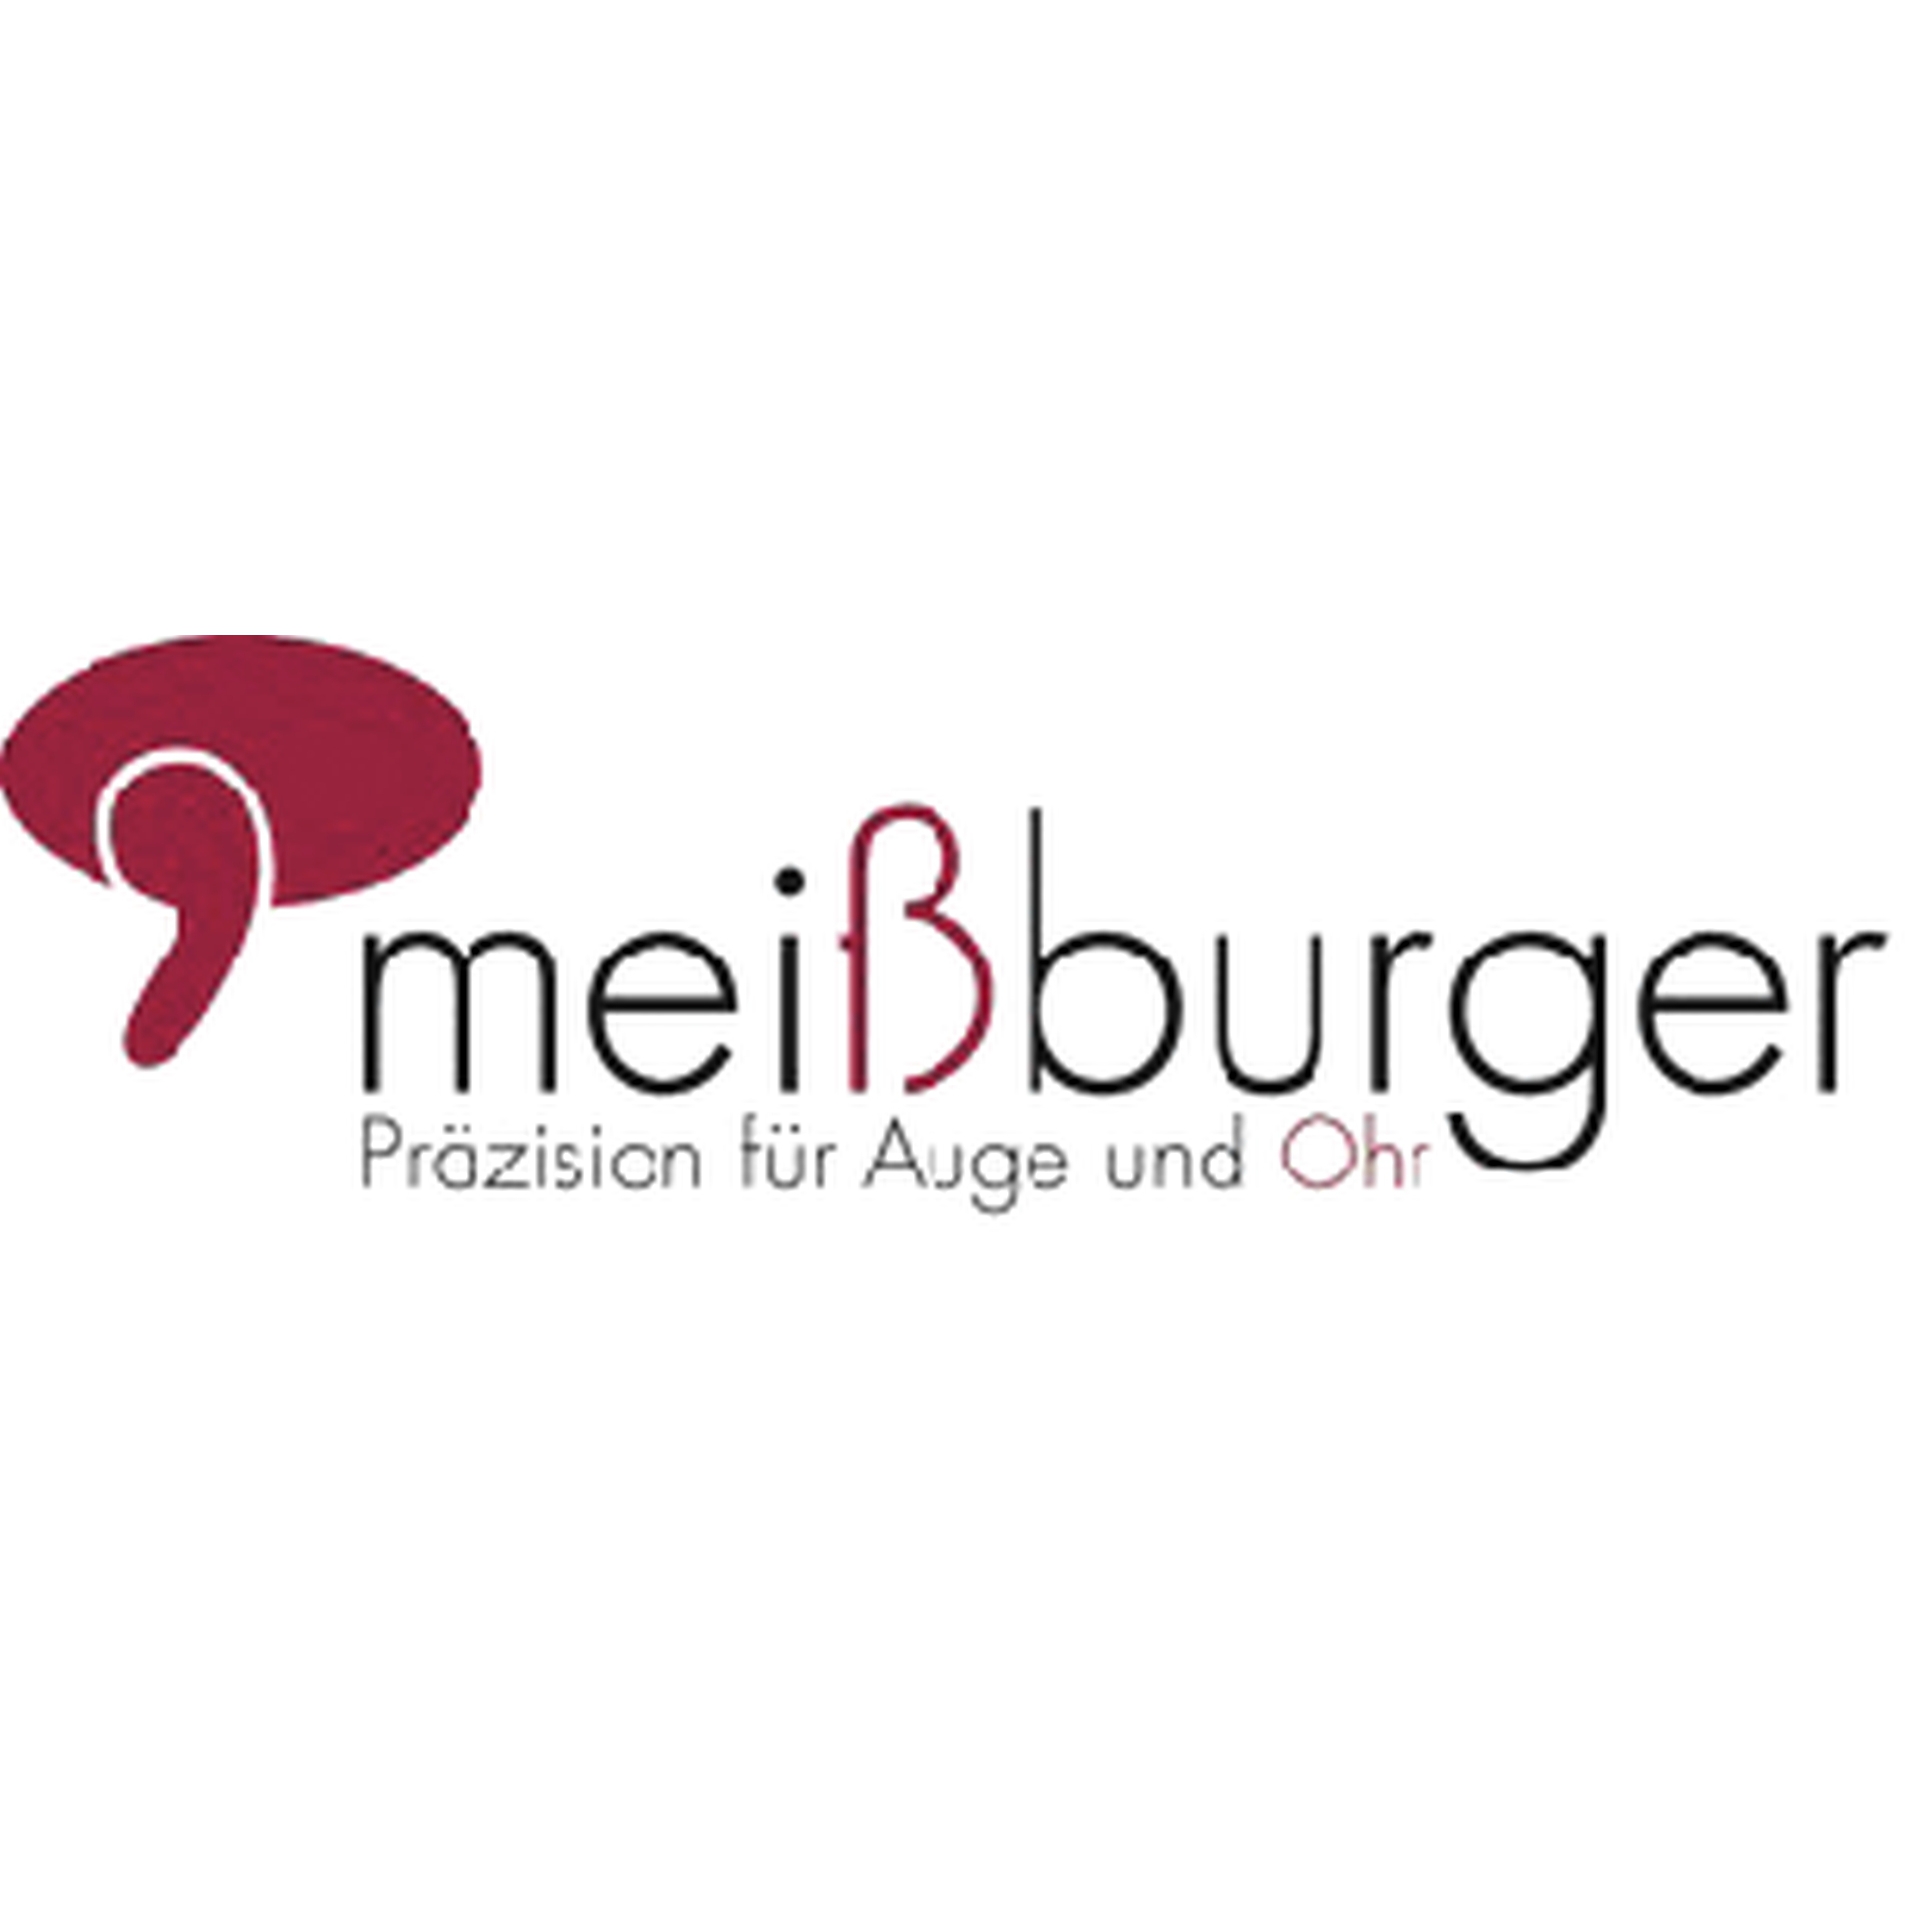 Hans Meißburger GmbH Logo